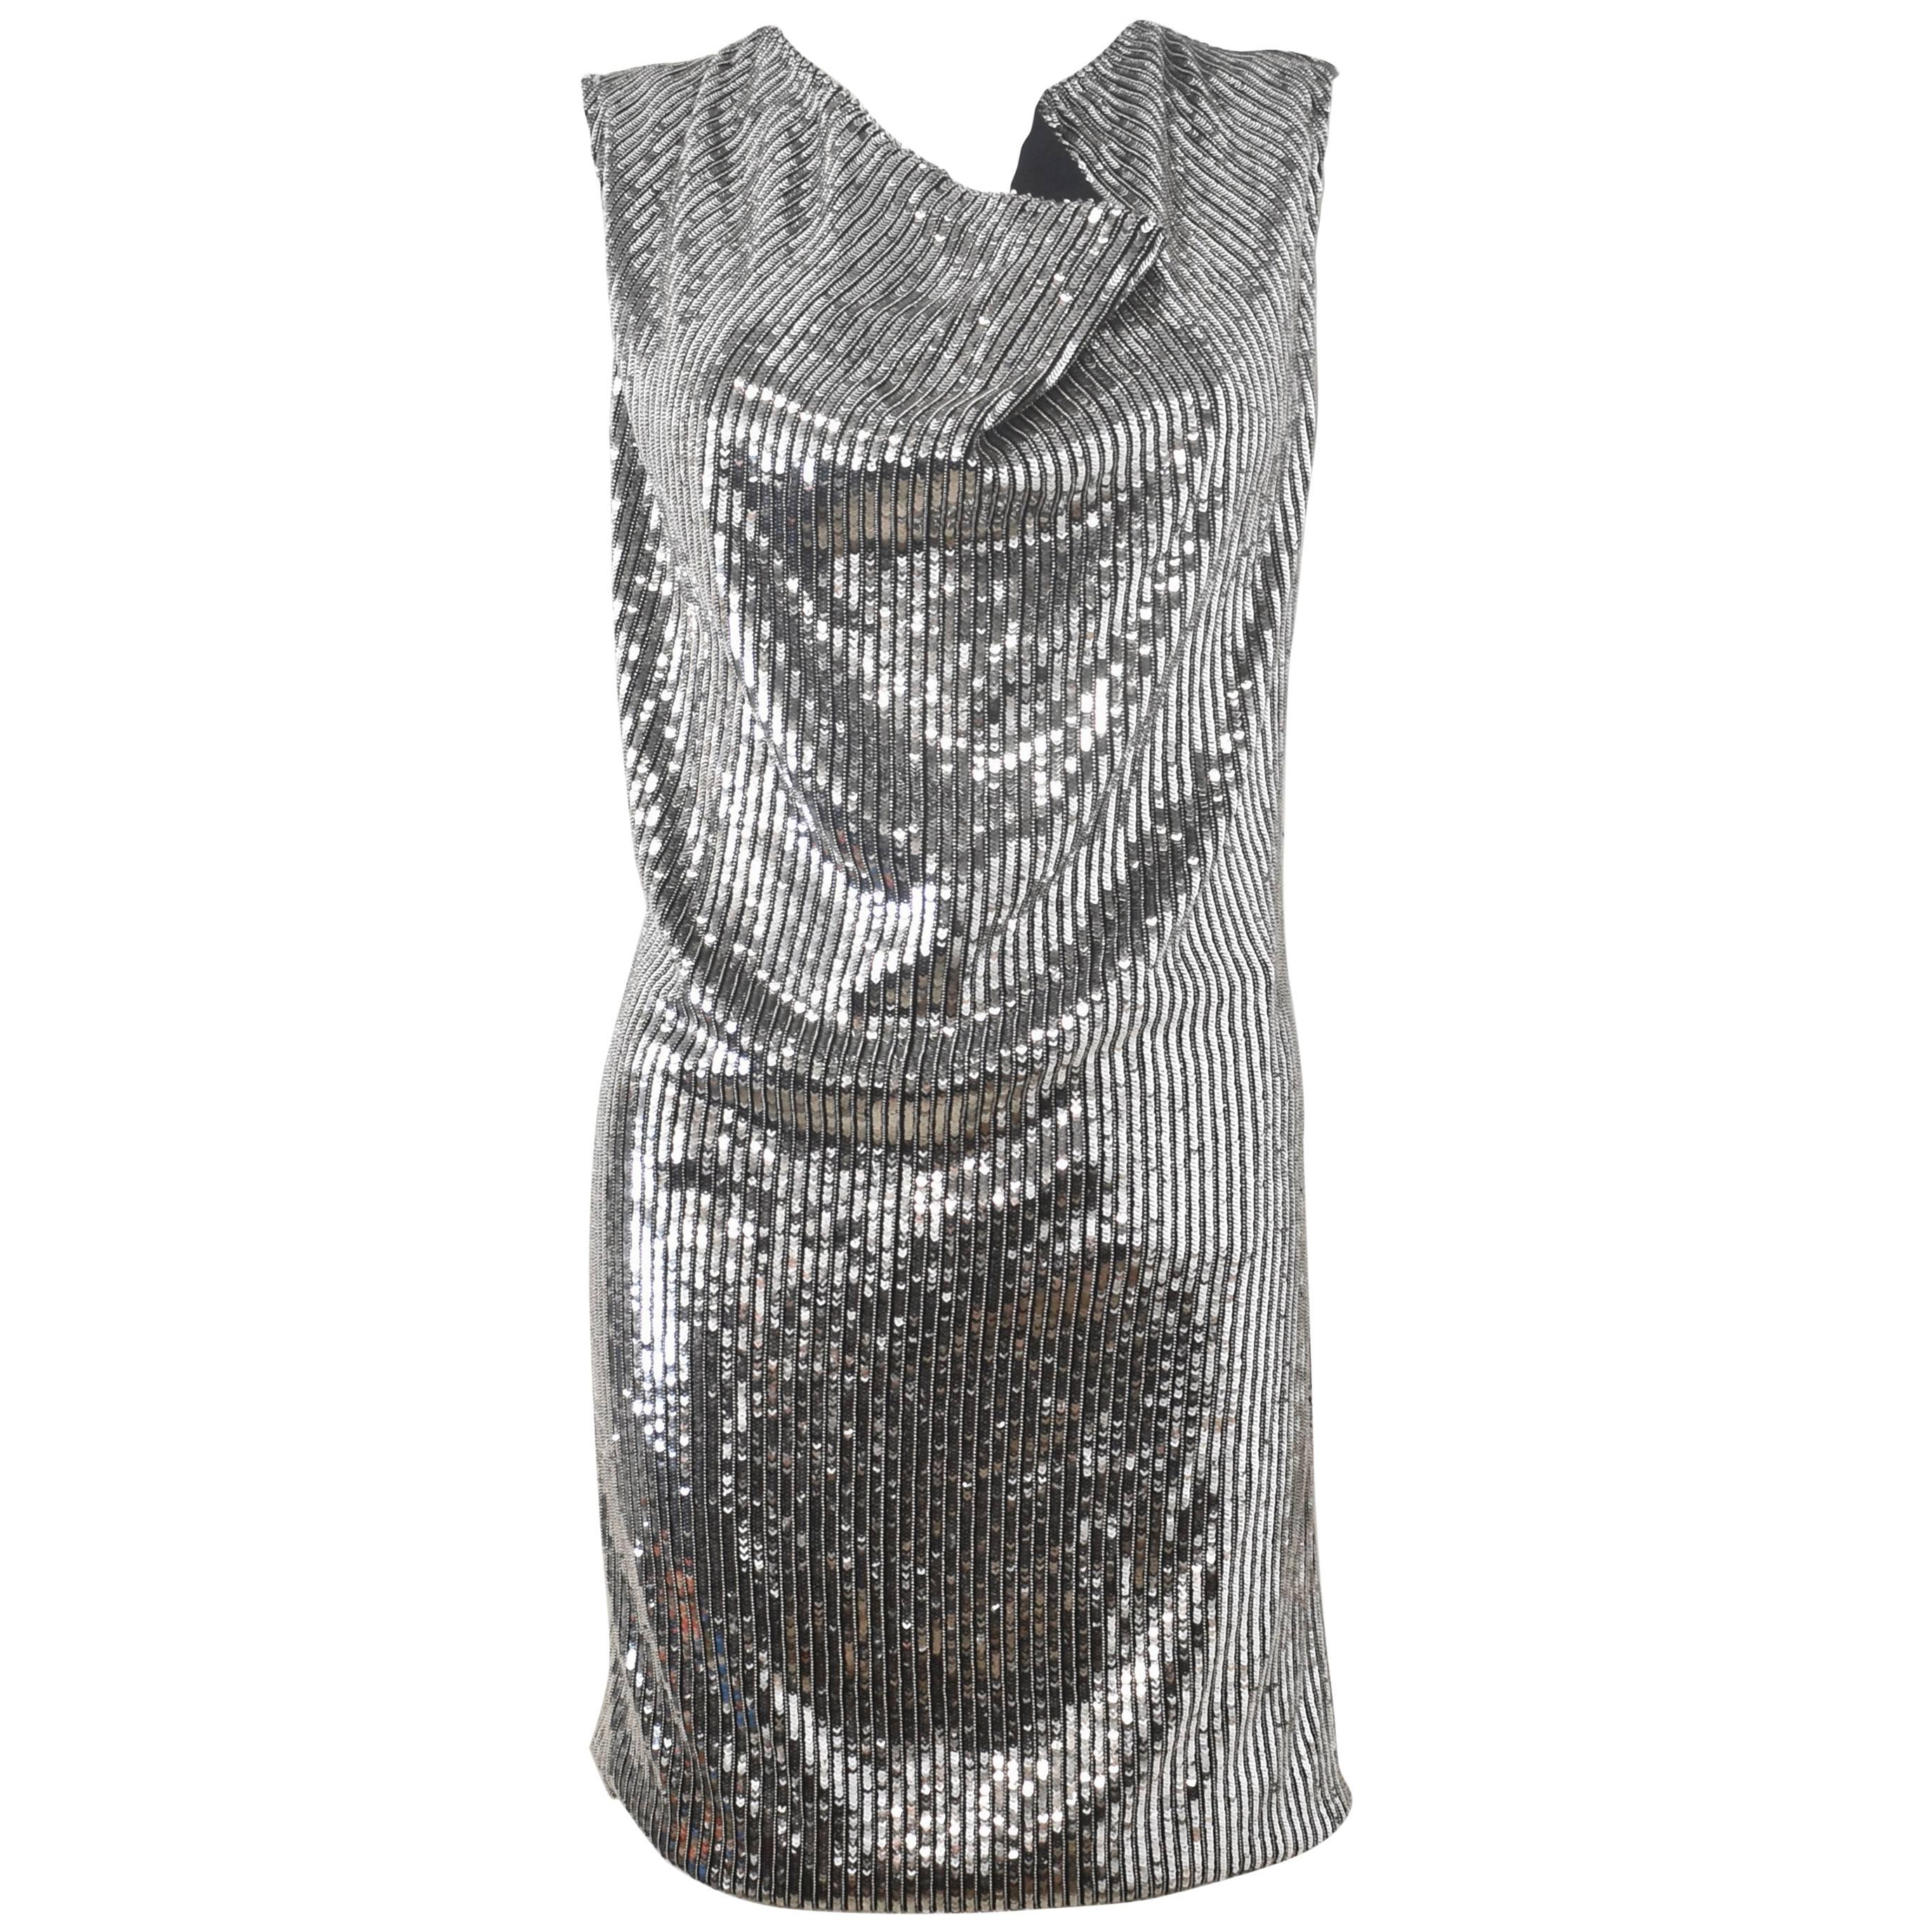 Saint Laurent Hedi Slimane Silver Silk Sequin and Beaded Mini Dress 2015